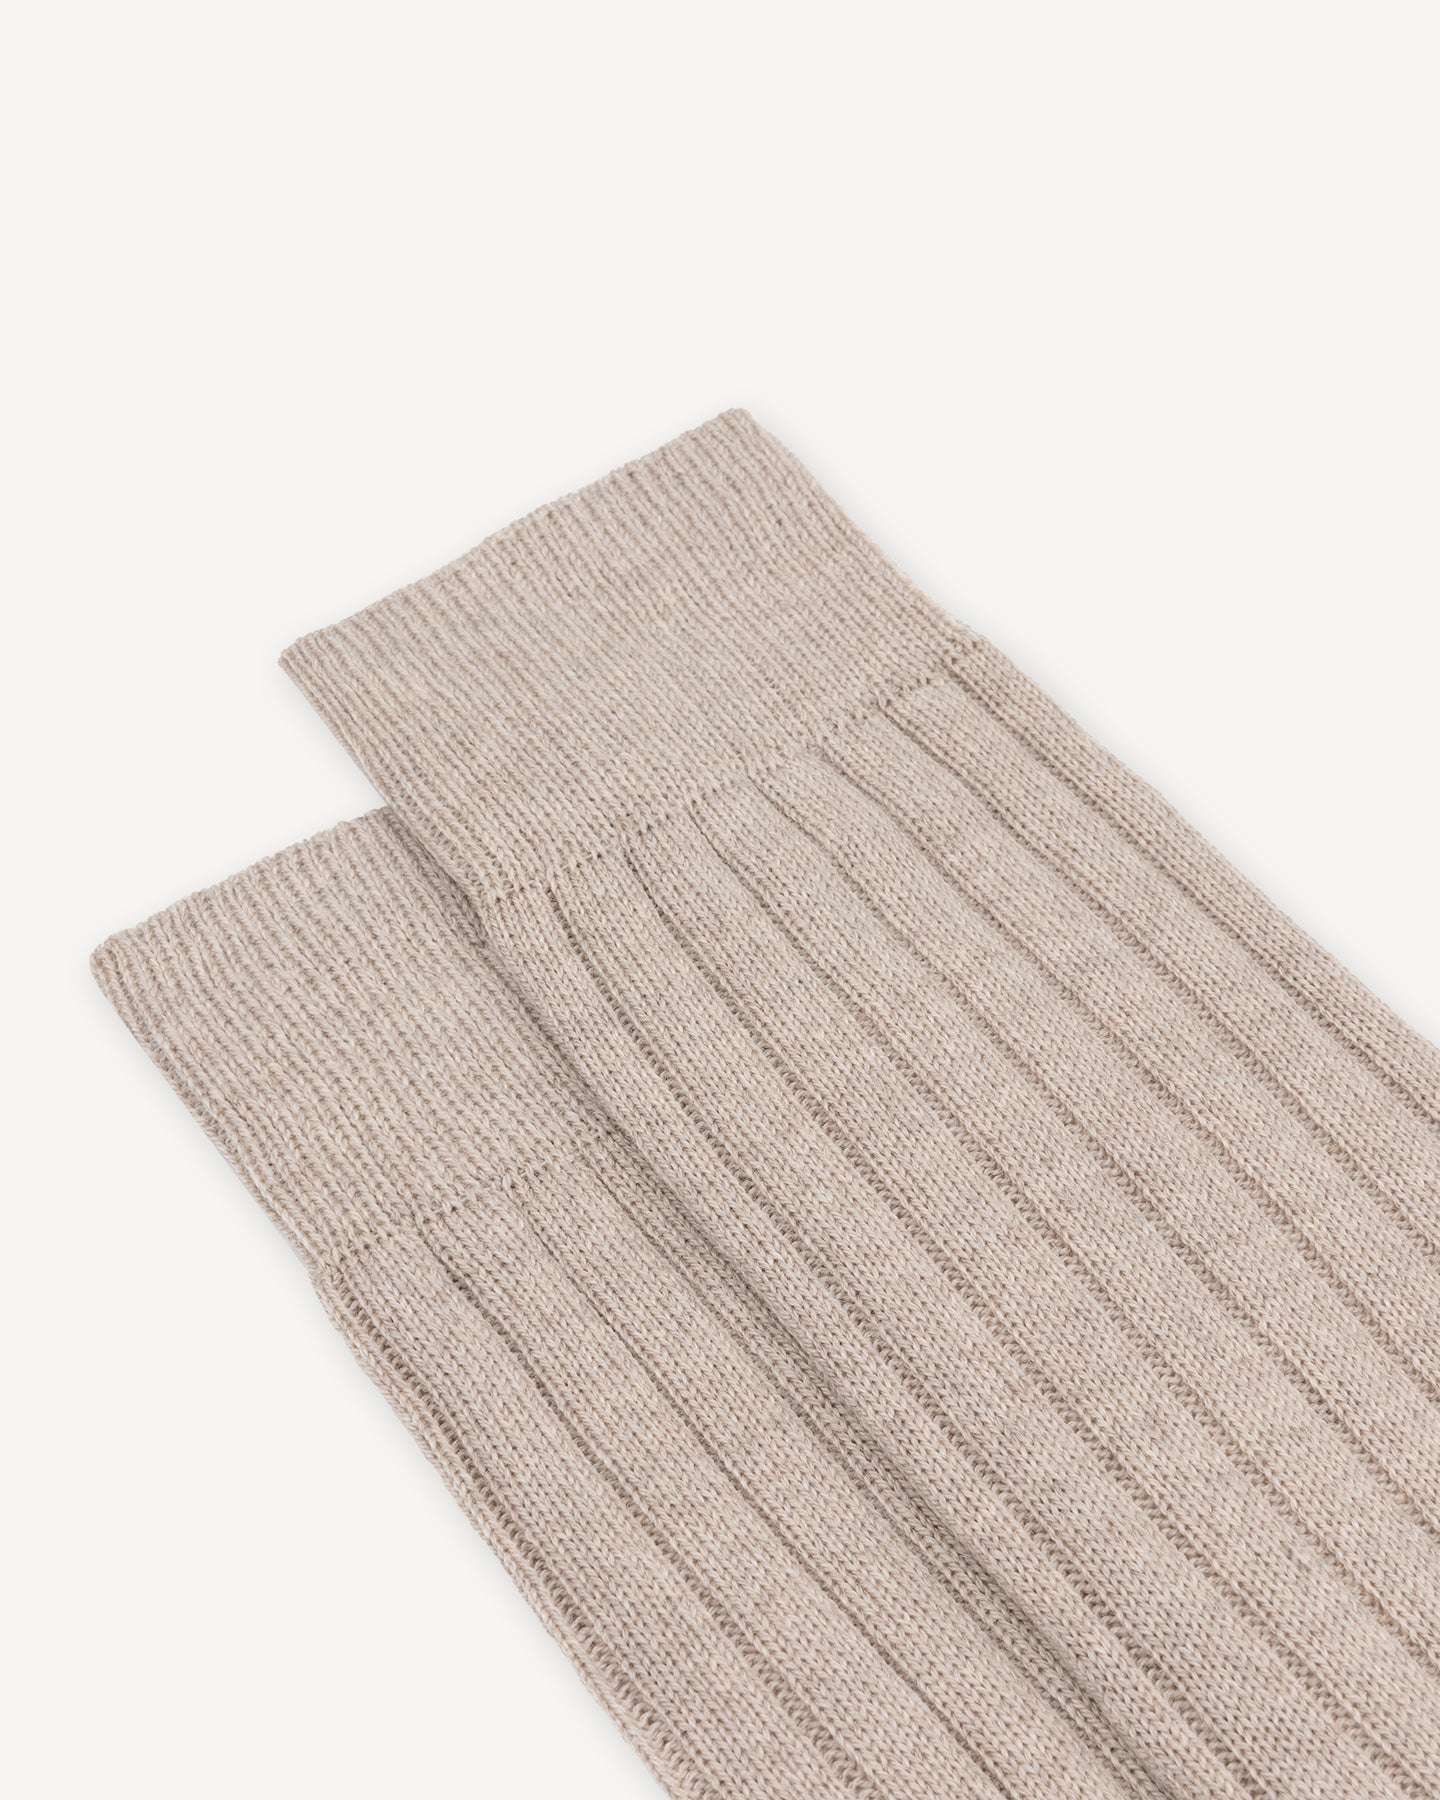 Light brown wide rib socks made from Australian merino wool